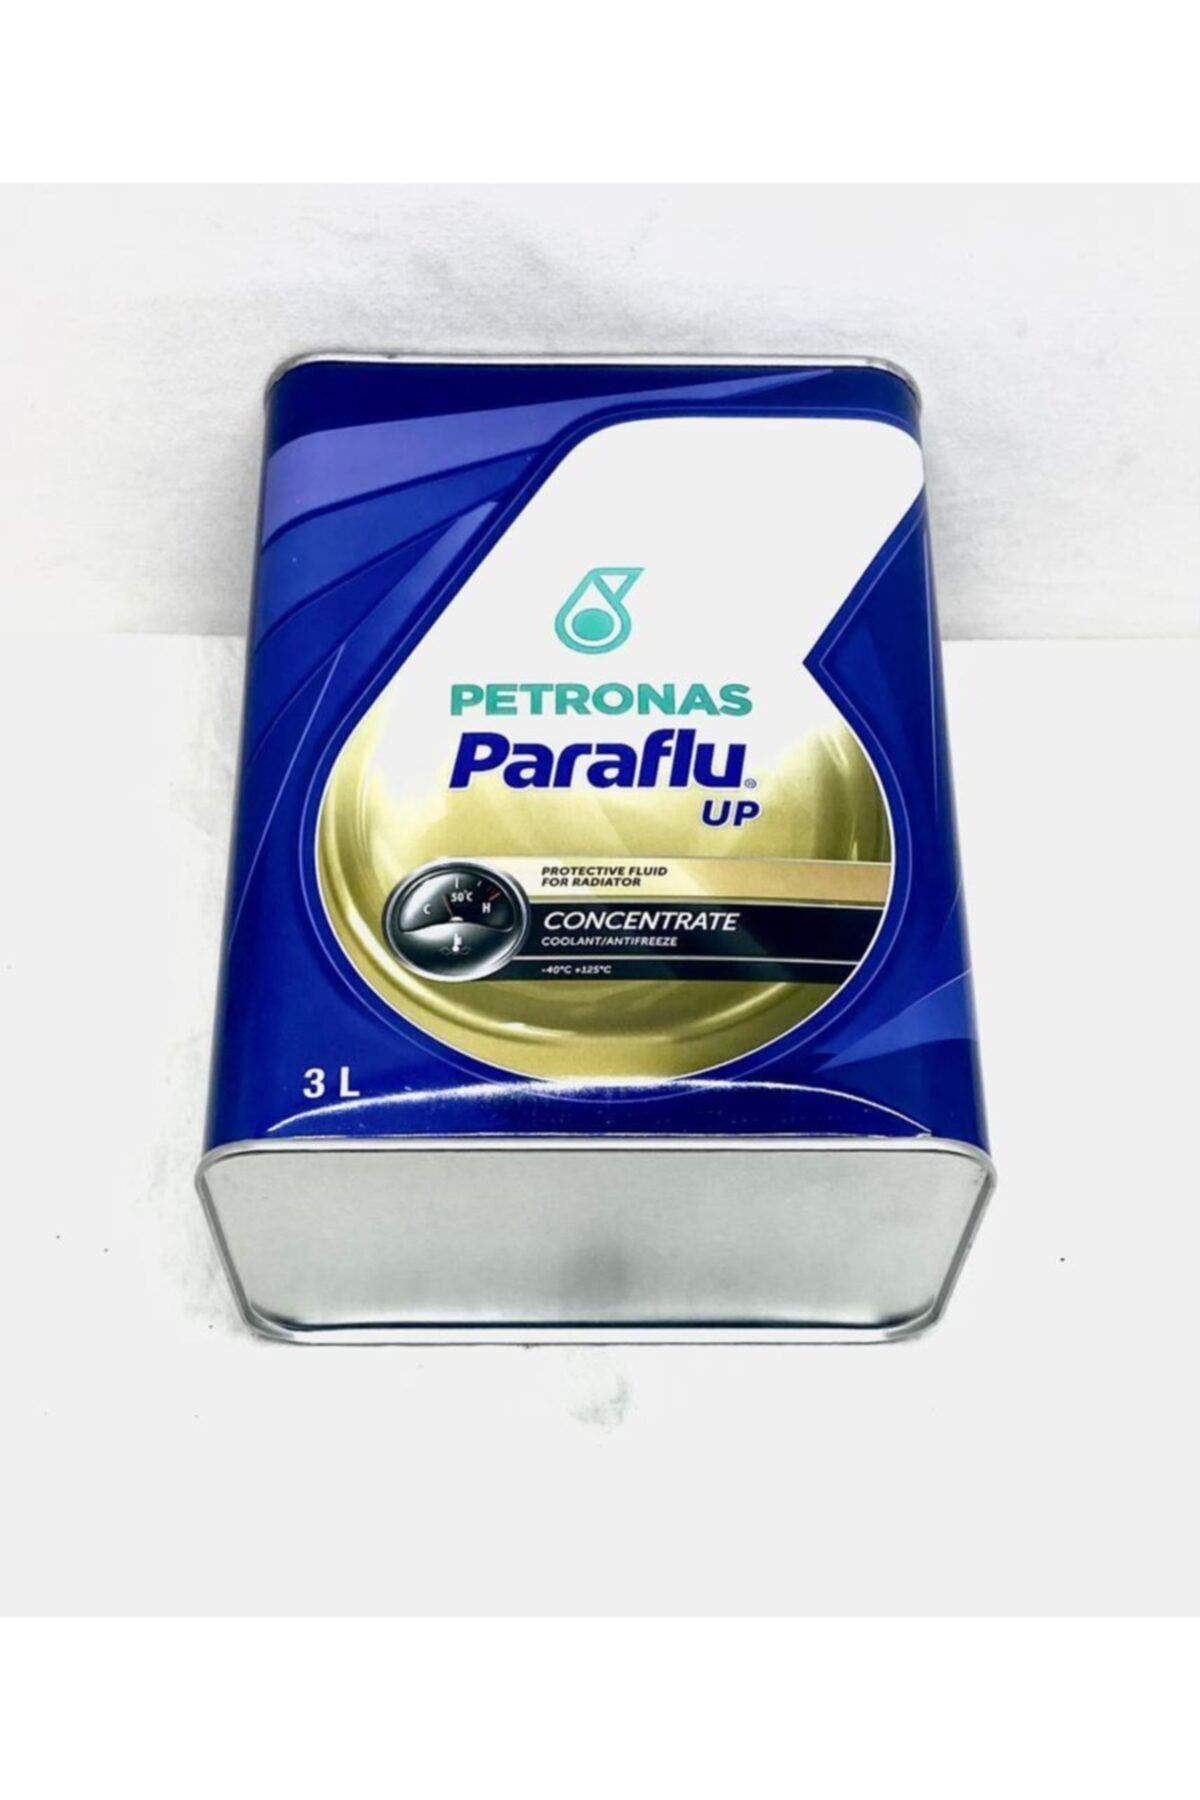 Patronas Paraflu Up Coolant- Concentrate